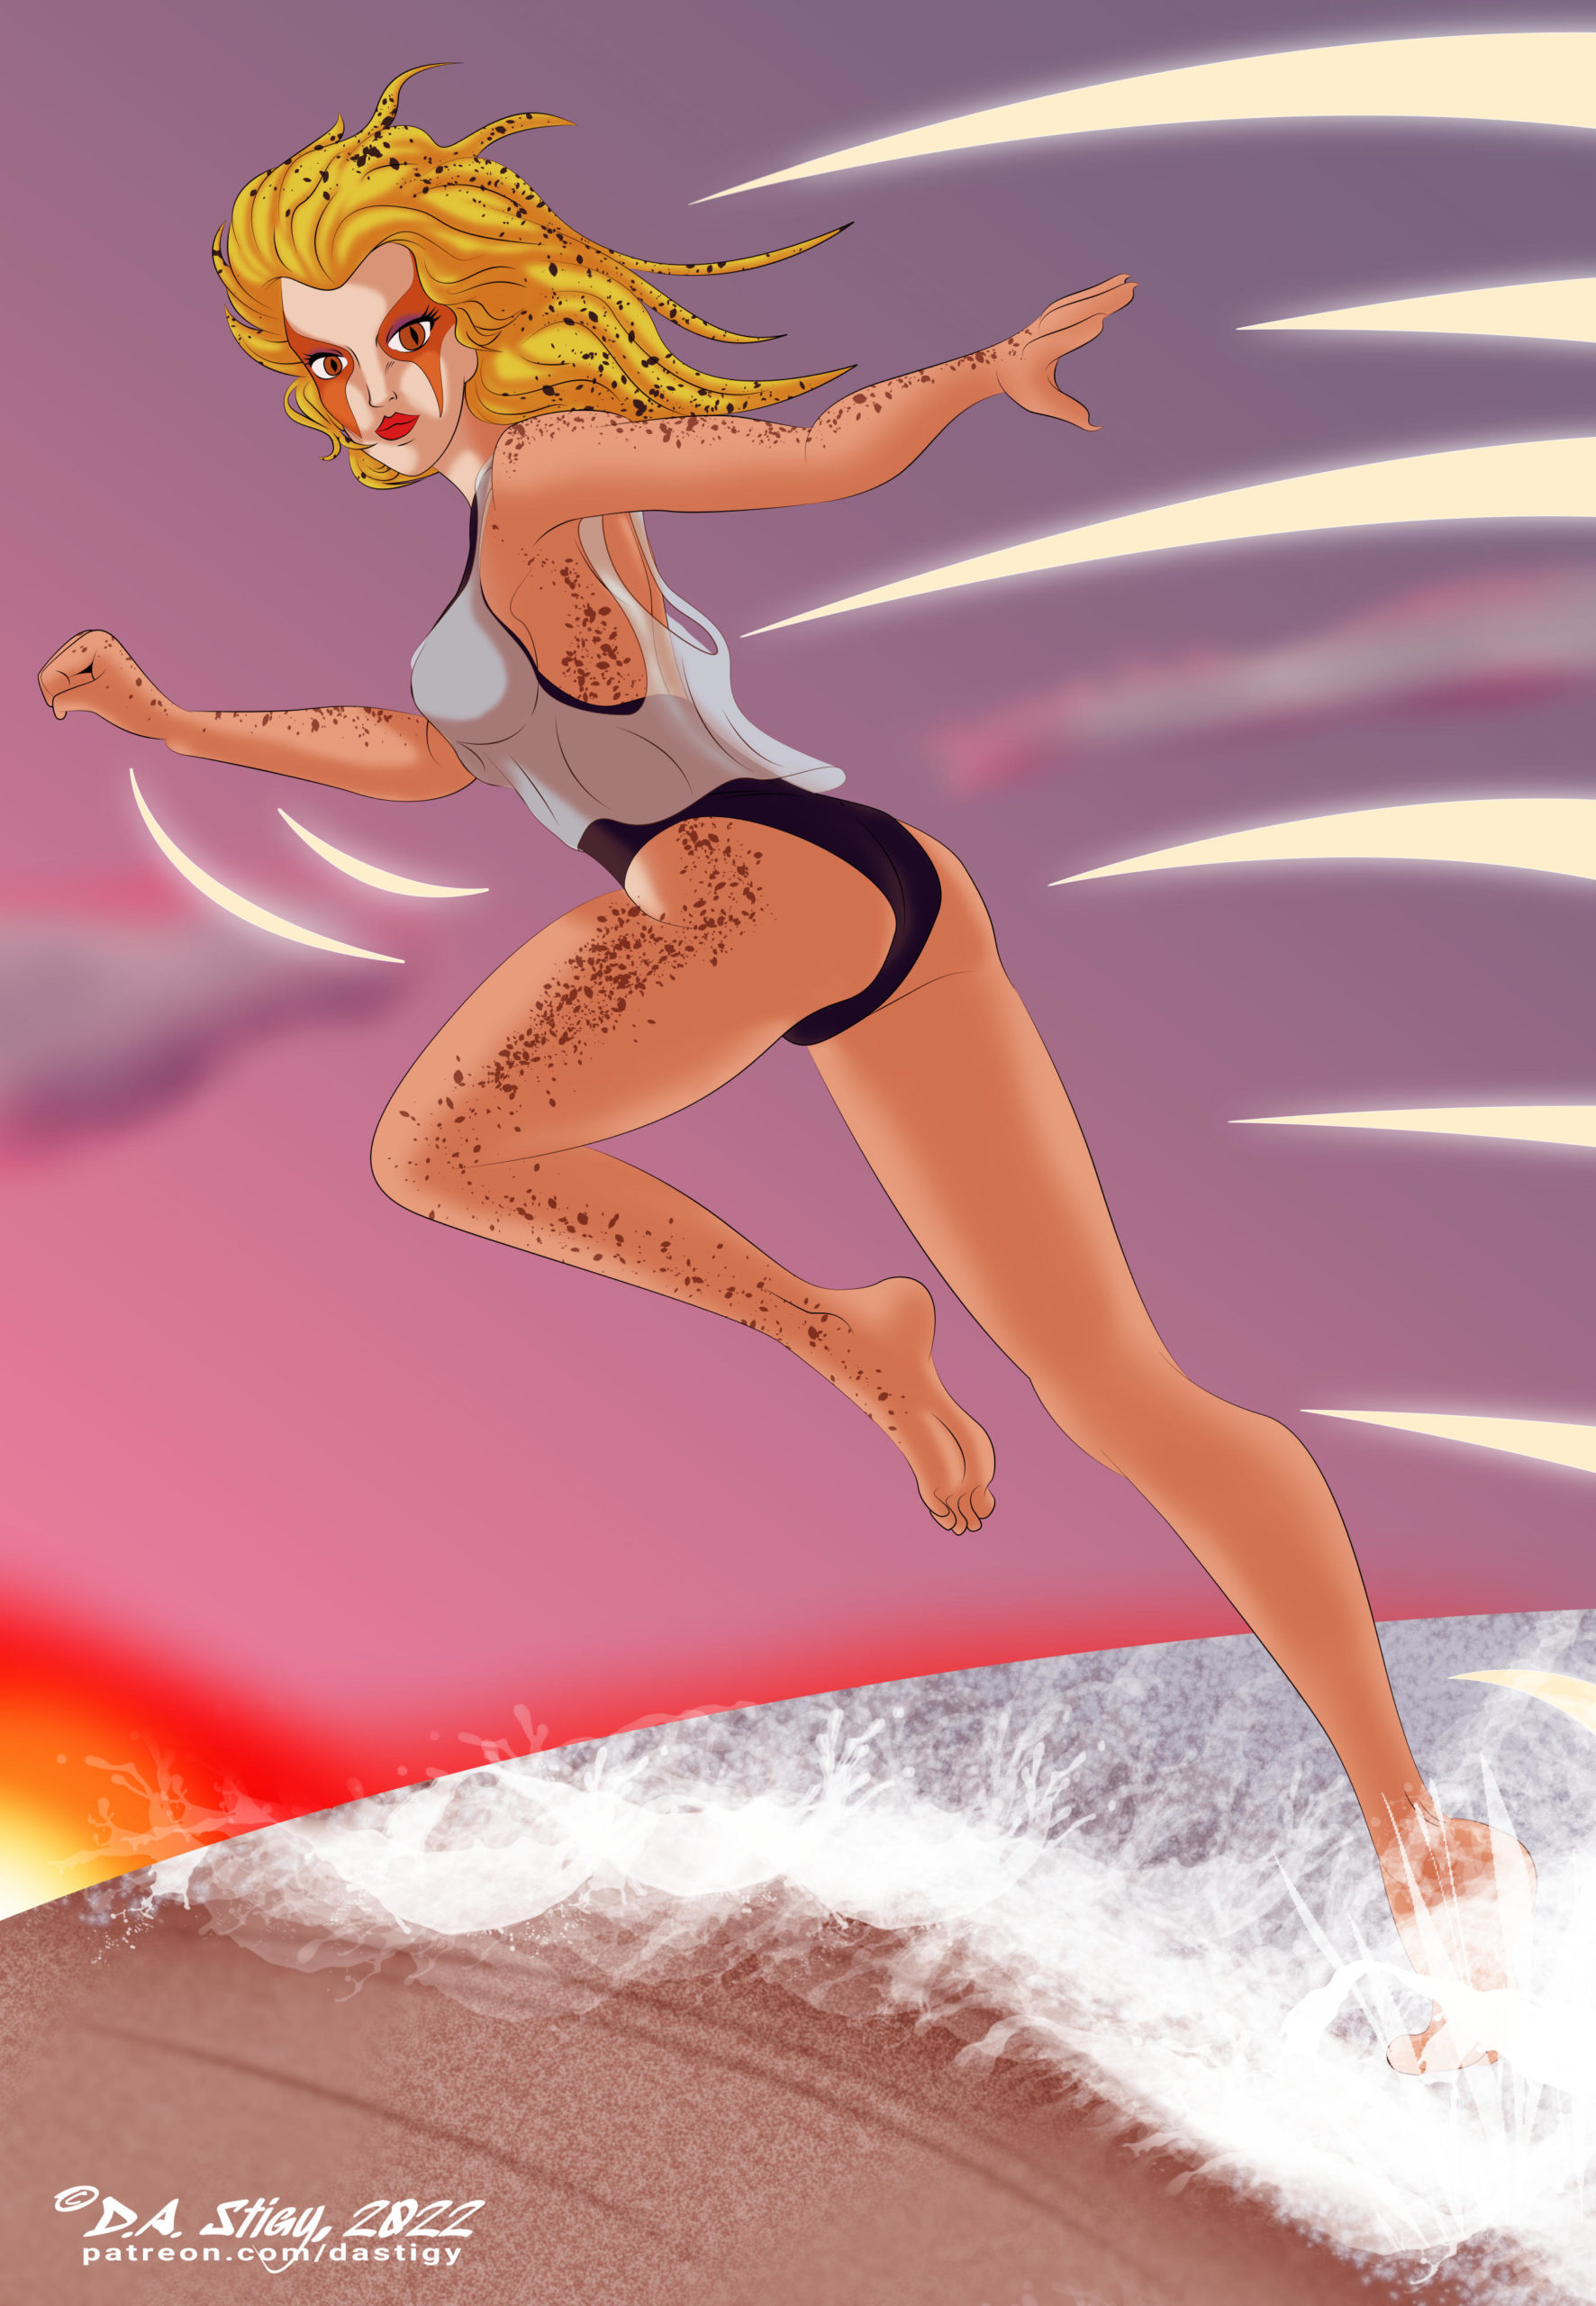 Cheetara from the Original Thundercats, sprinting at top speed long the surf.